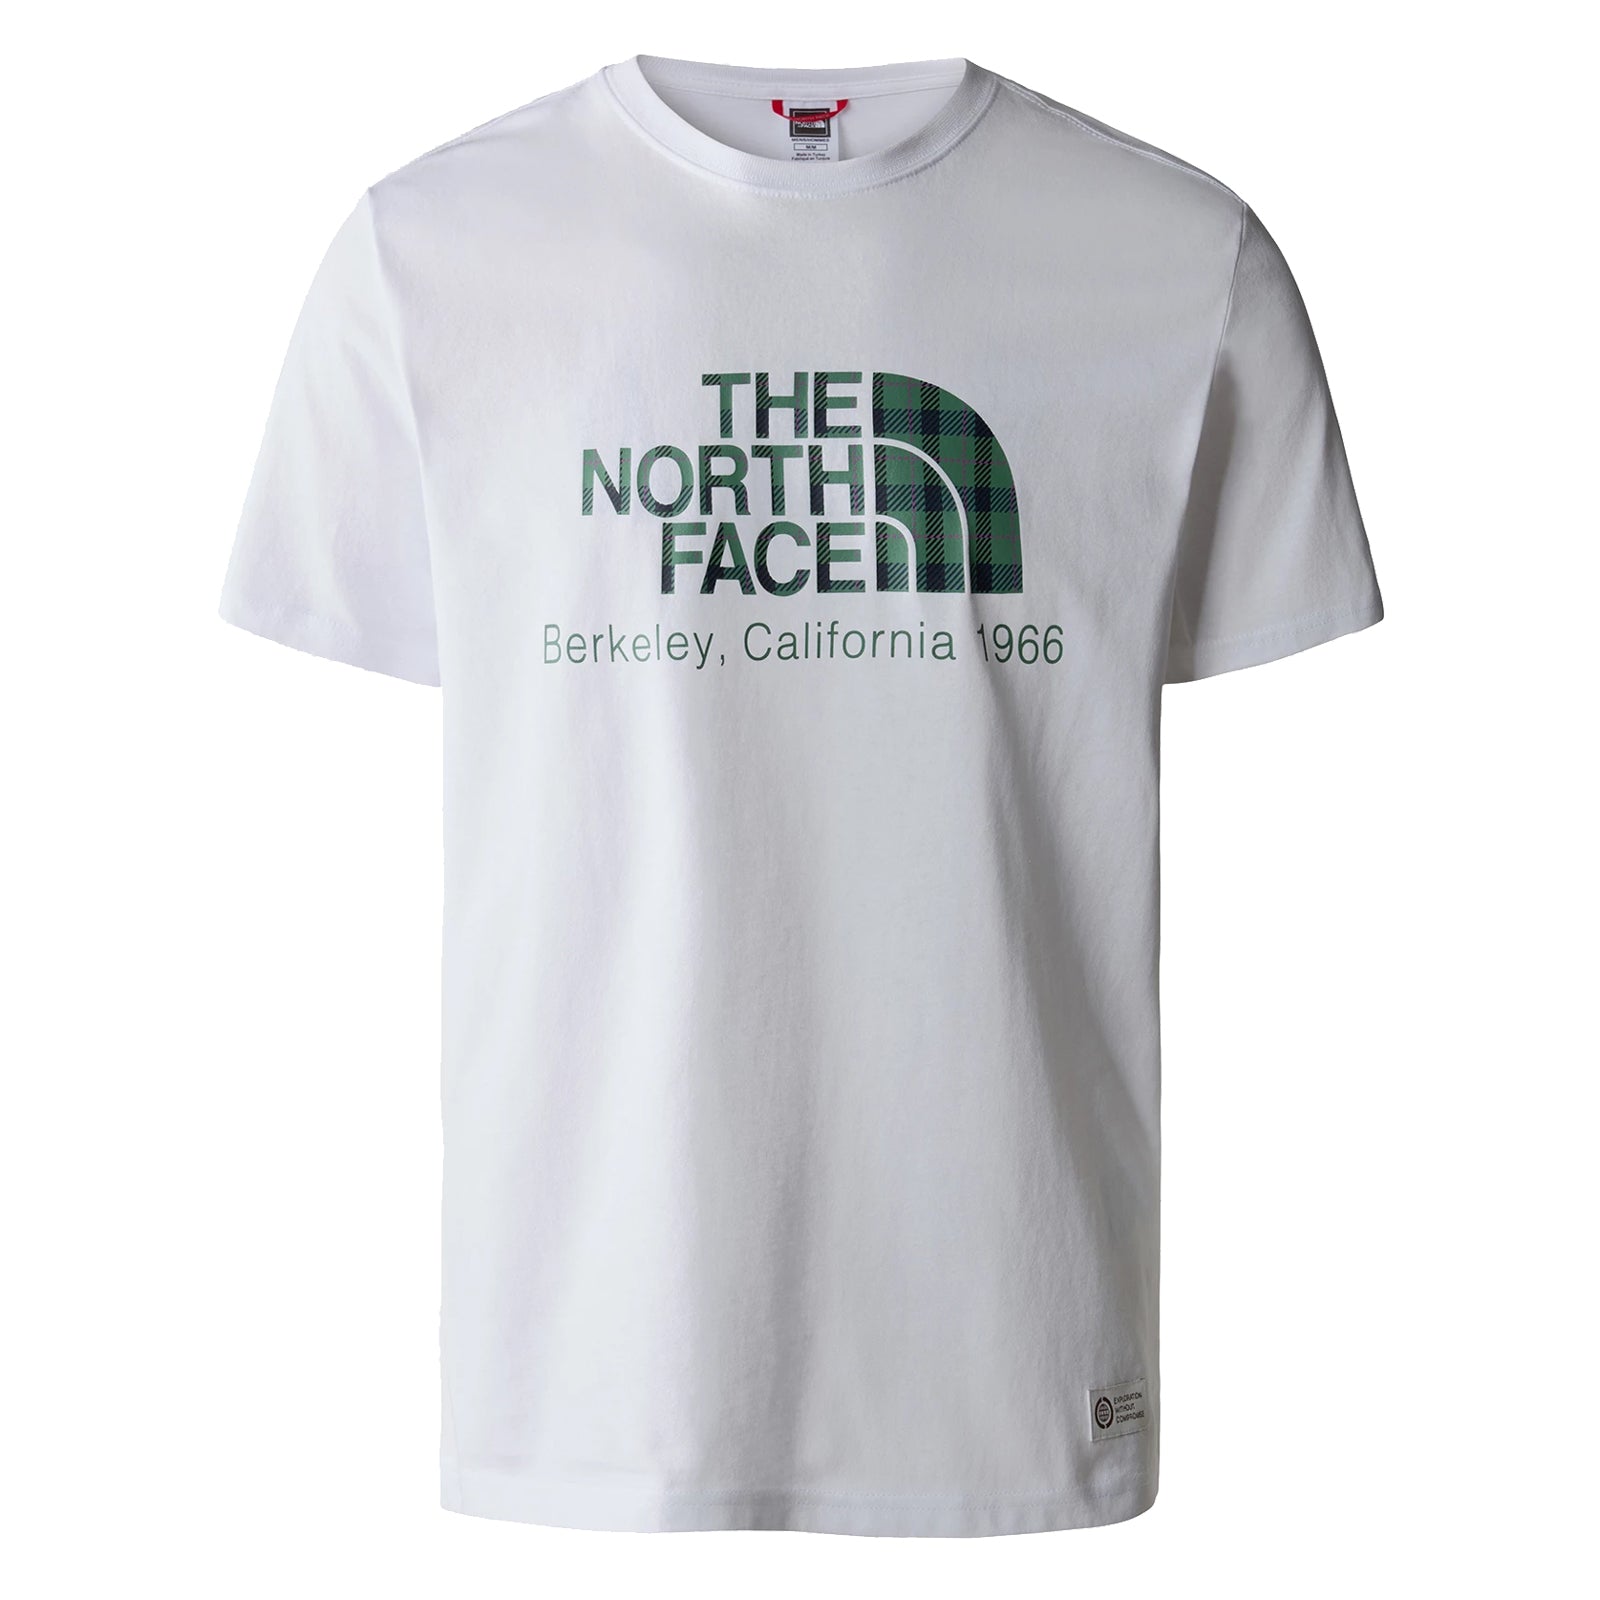 Camiseta The North Face Berkeley California TNF White/Deep Grass Green Hero